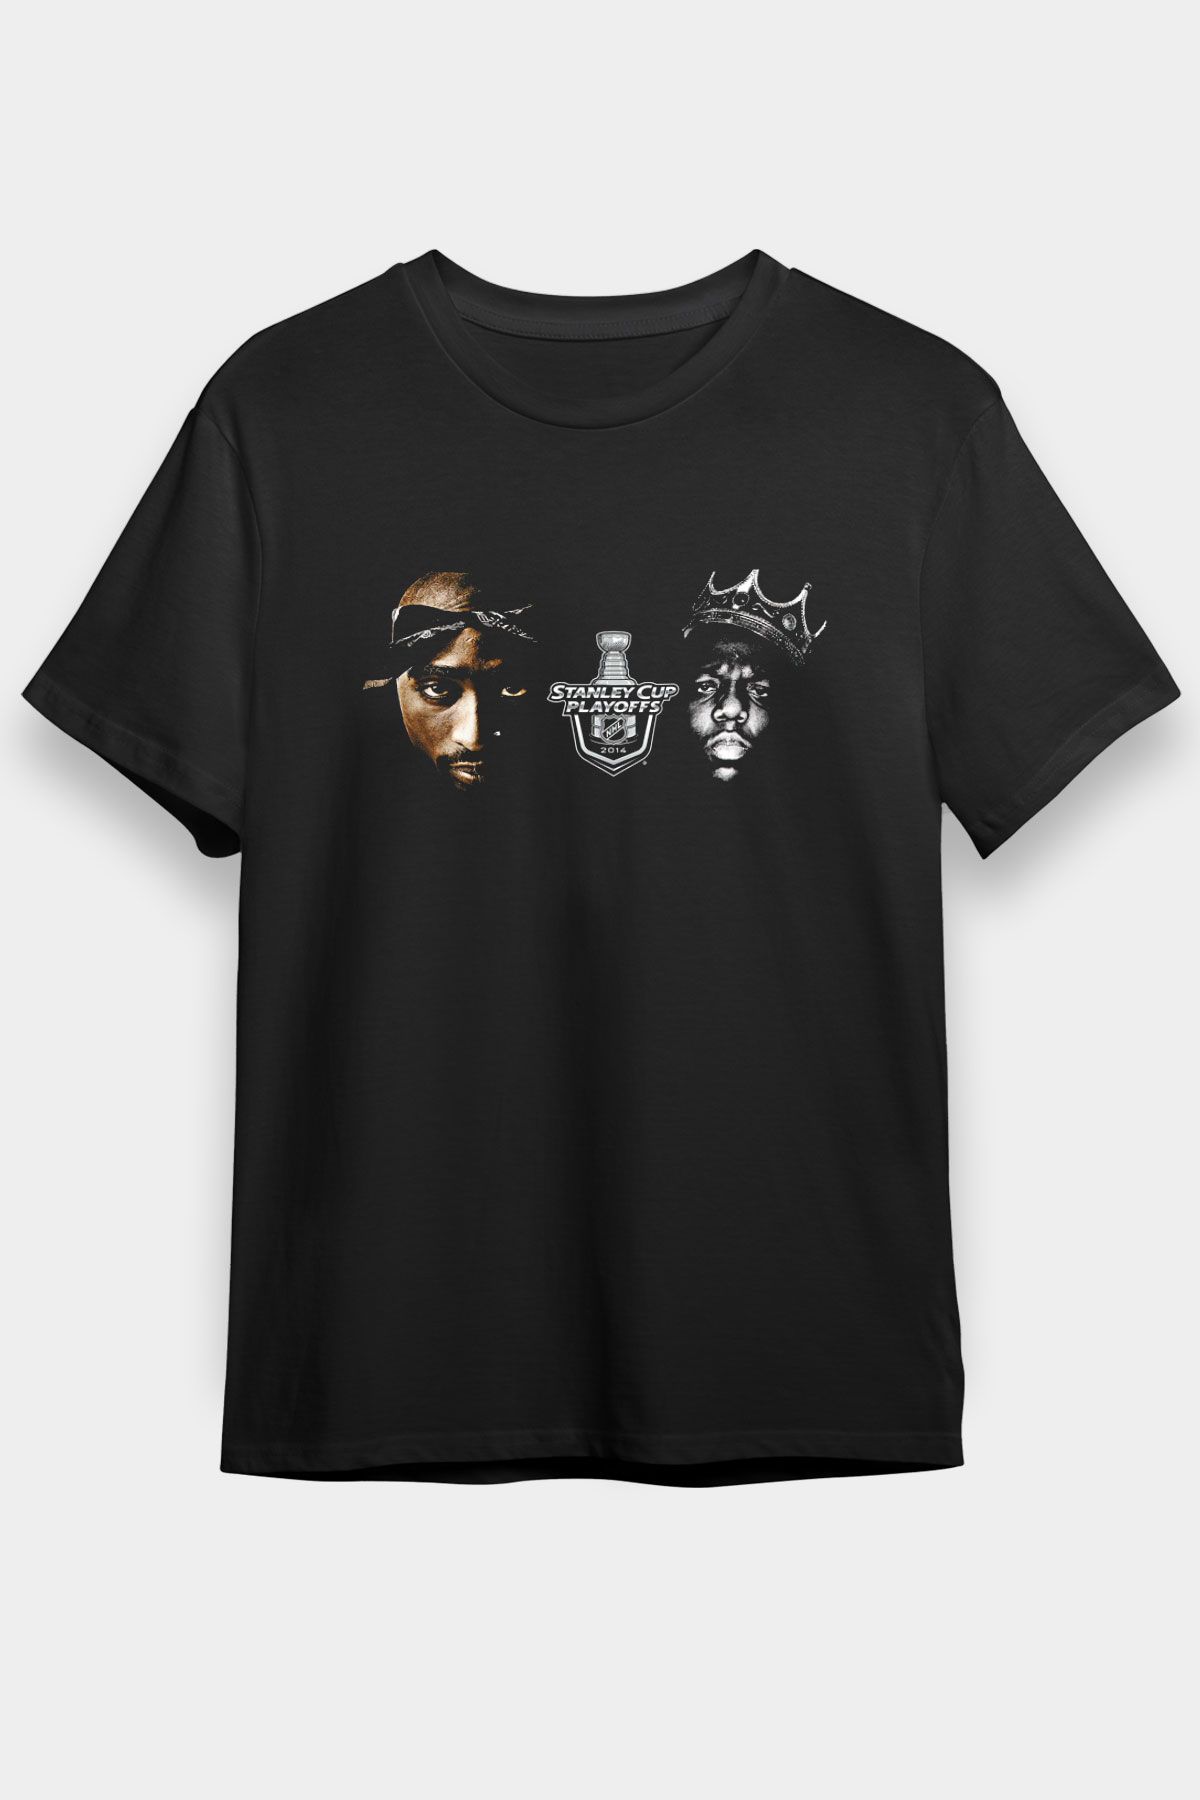 West Side Connection American Hip Hop Rap supergroup Tee shirt